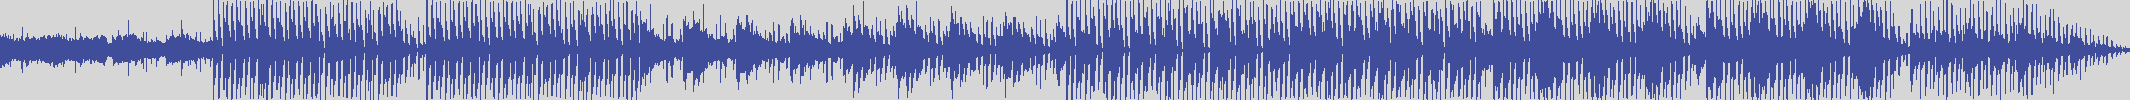 noclouds_chillout [NOC021] Carl Bikkem - Ivory Tower [Chill Republic Mix] audio wave form